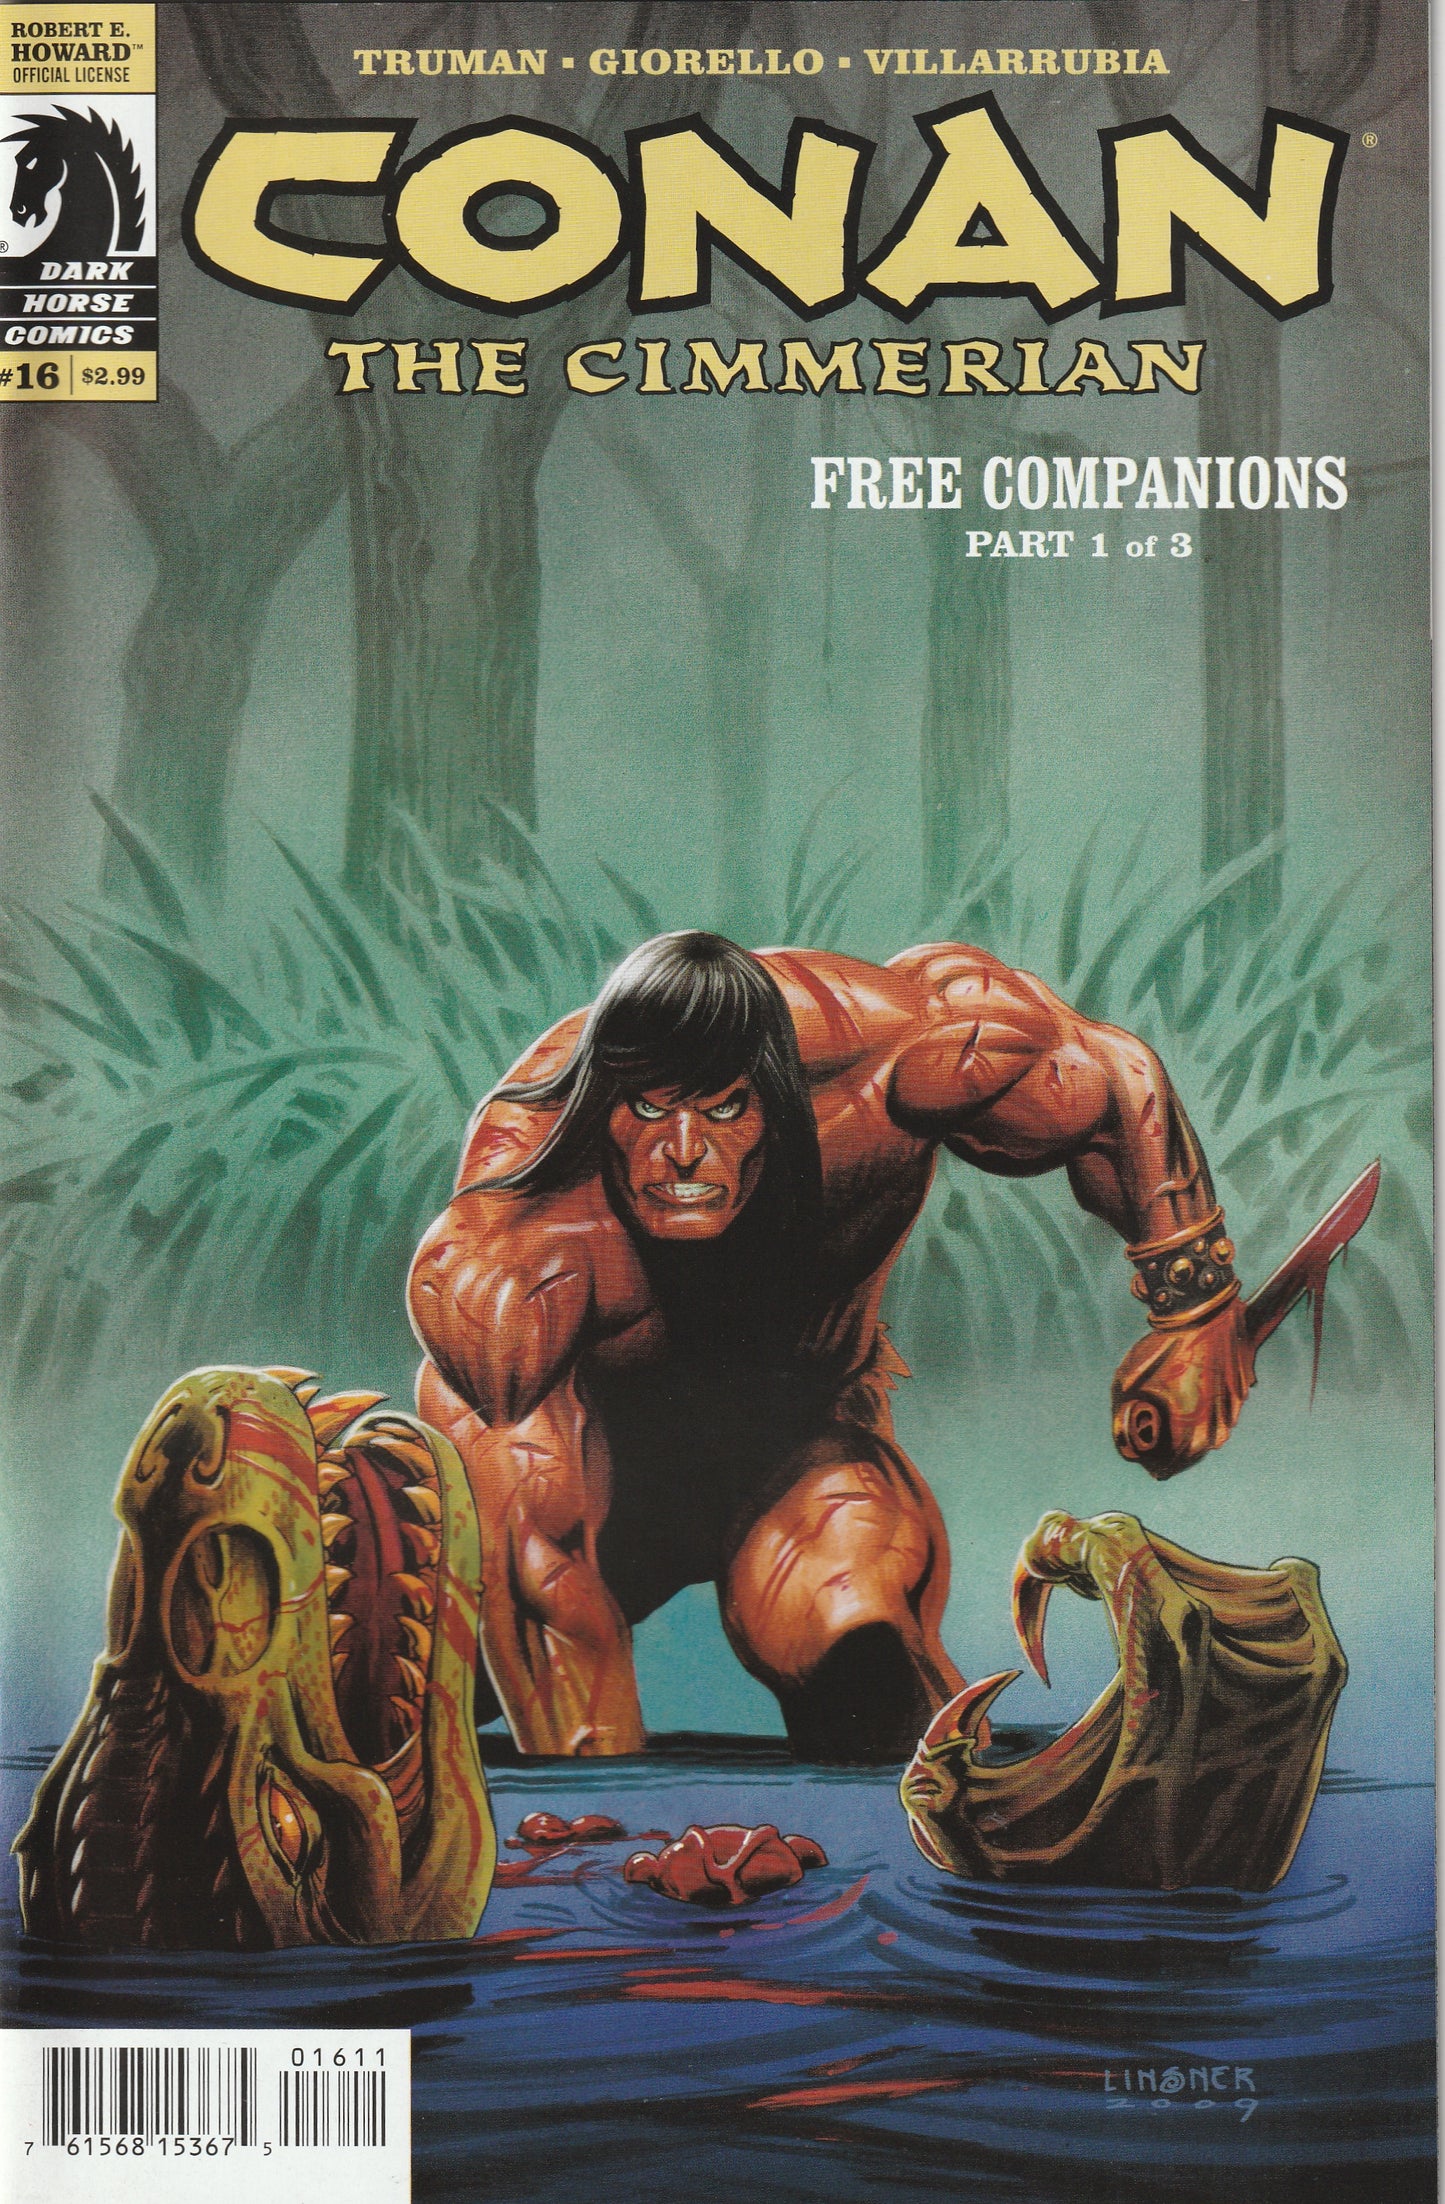 Conan The Cimmerian #16 (2009) - Joseph Michael Linsner cover